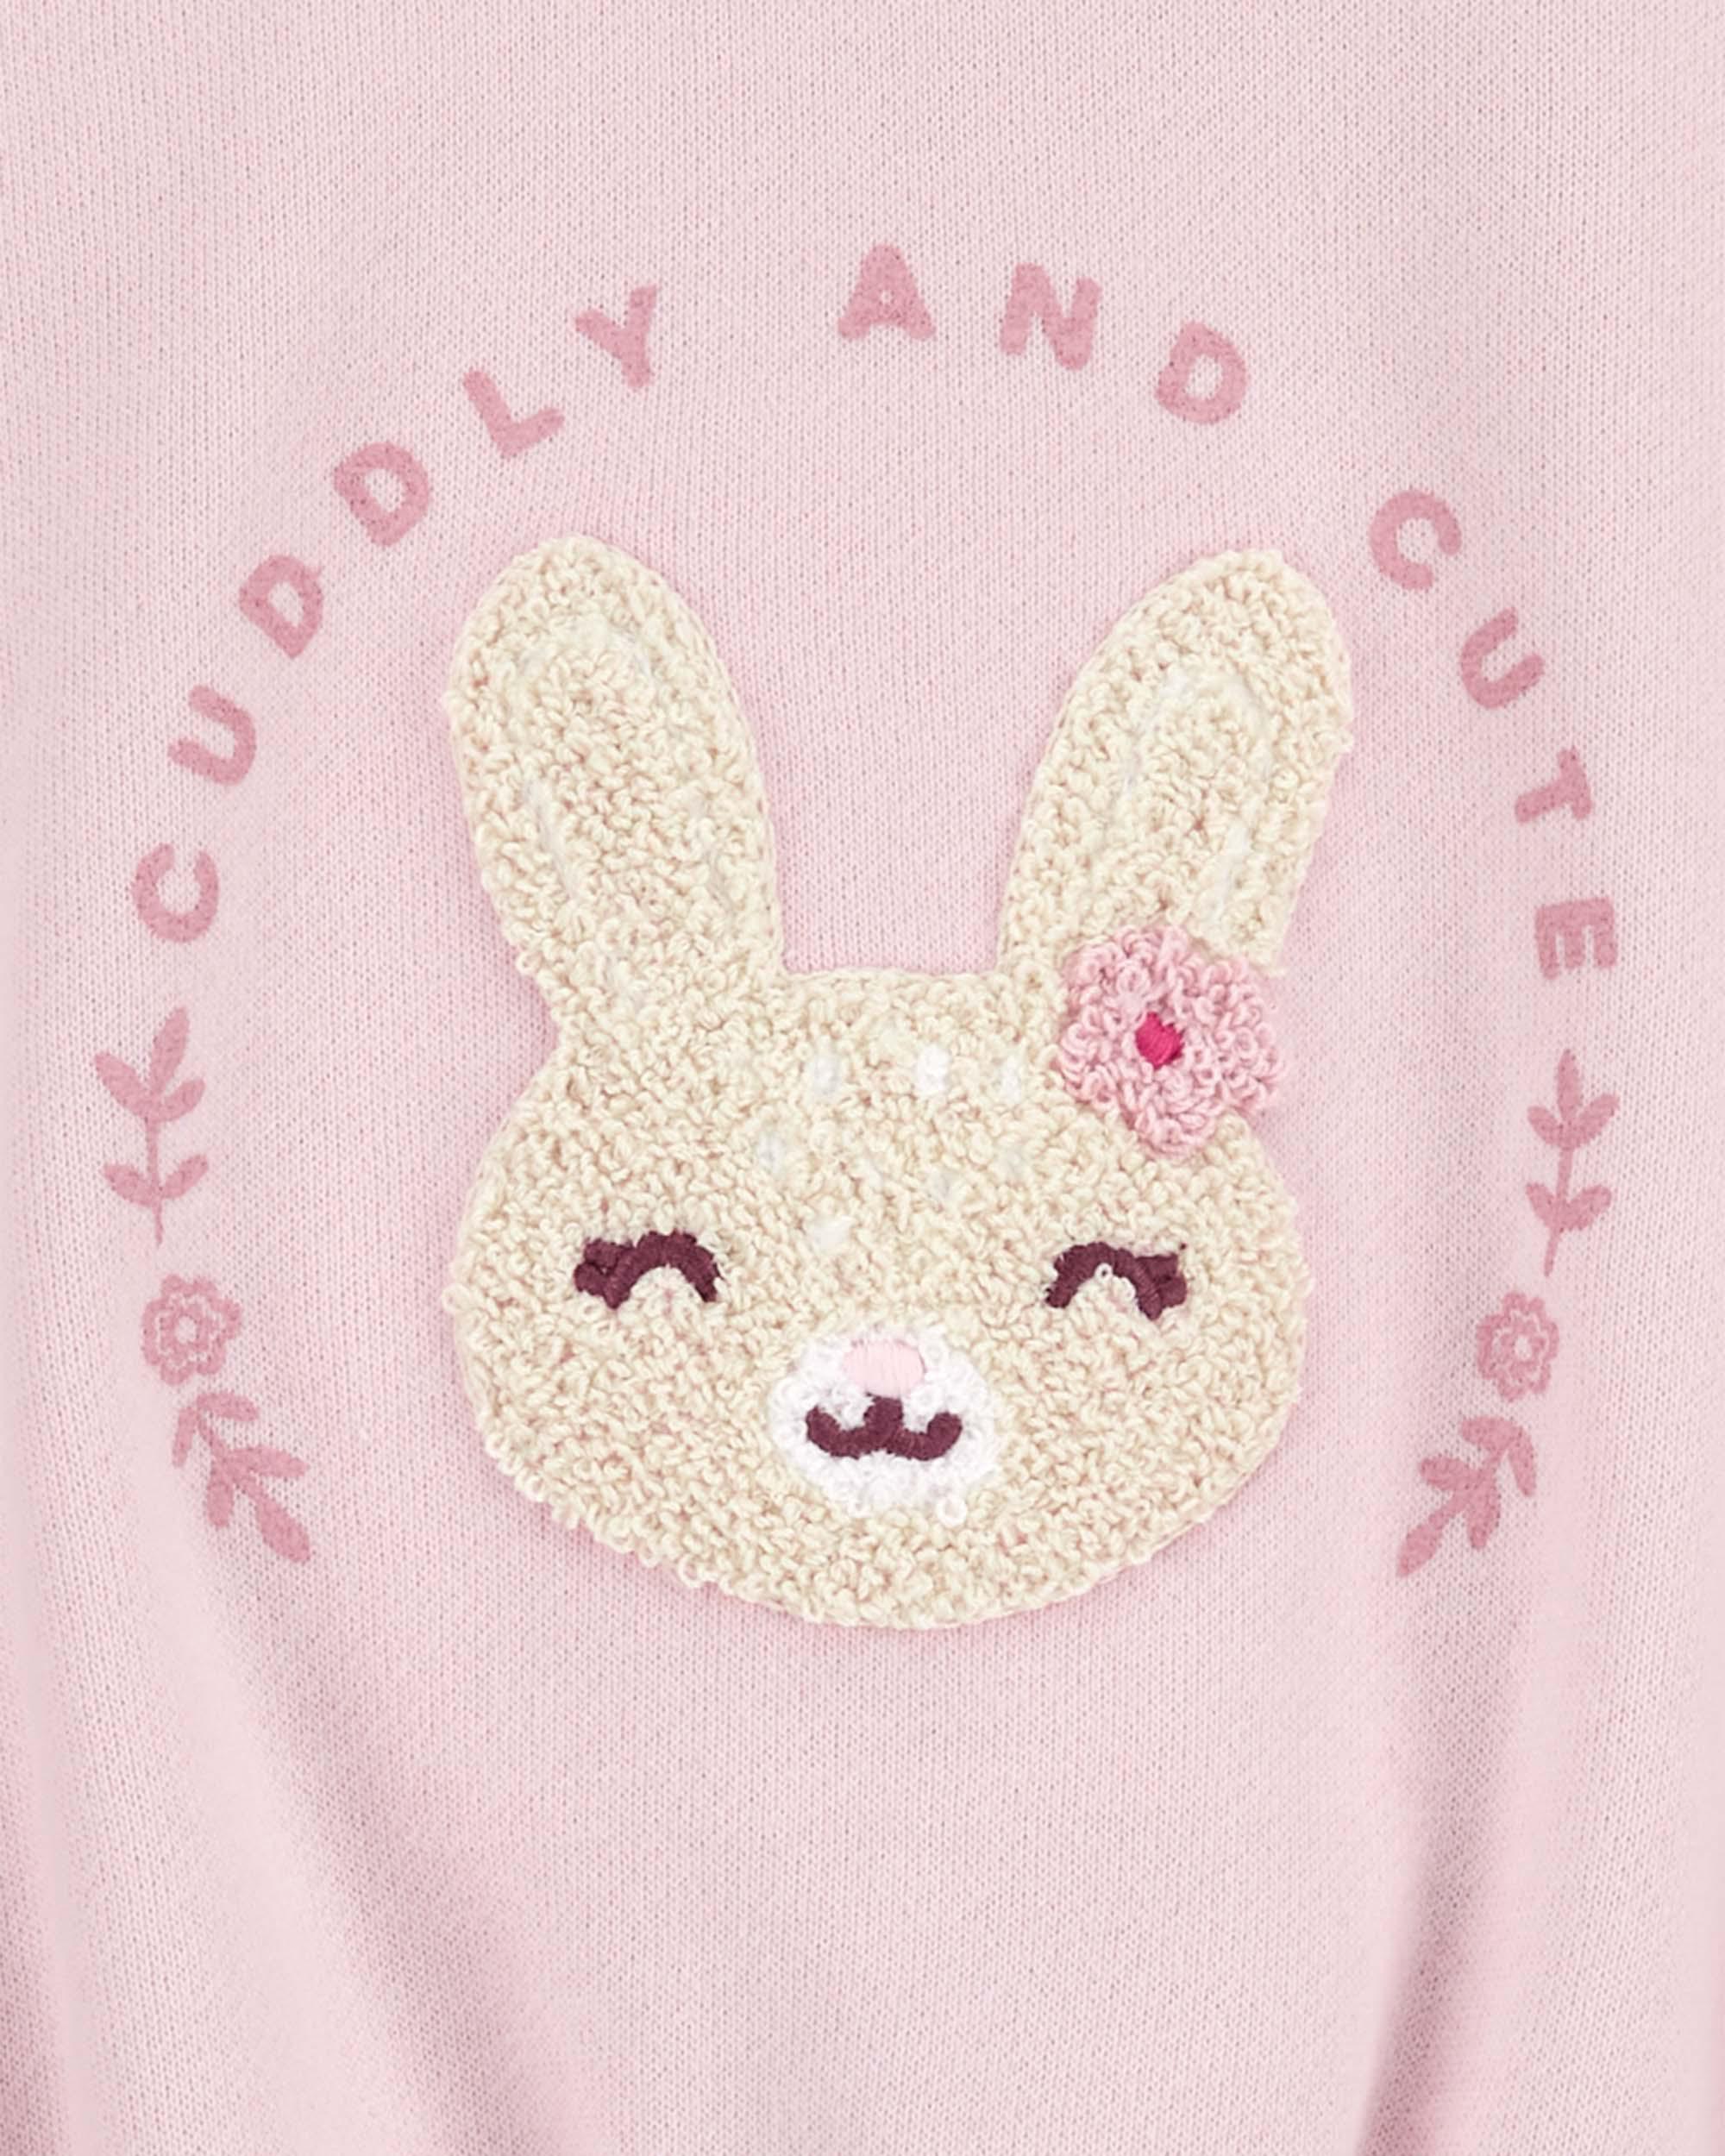 Toddler Bunny Pullover Sweatshirt